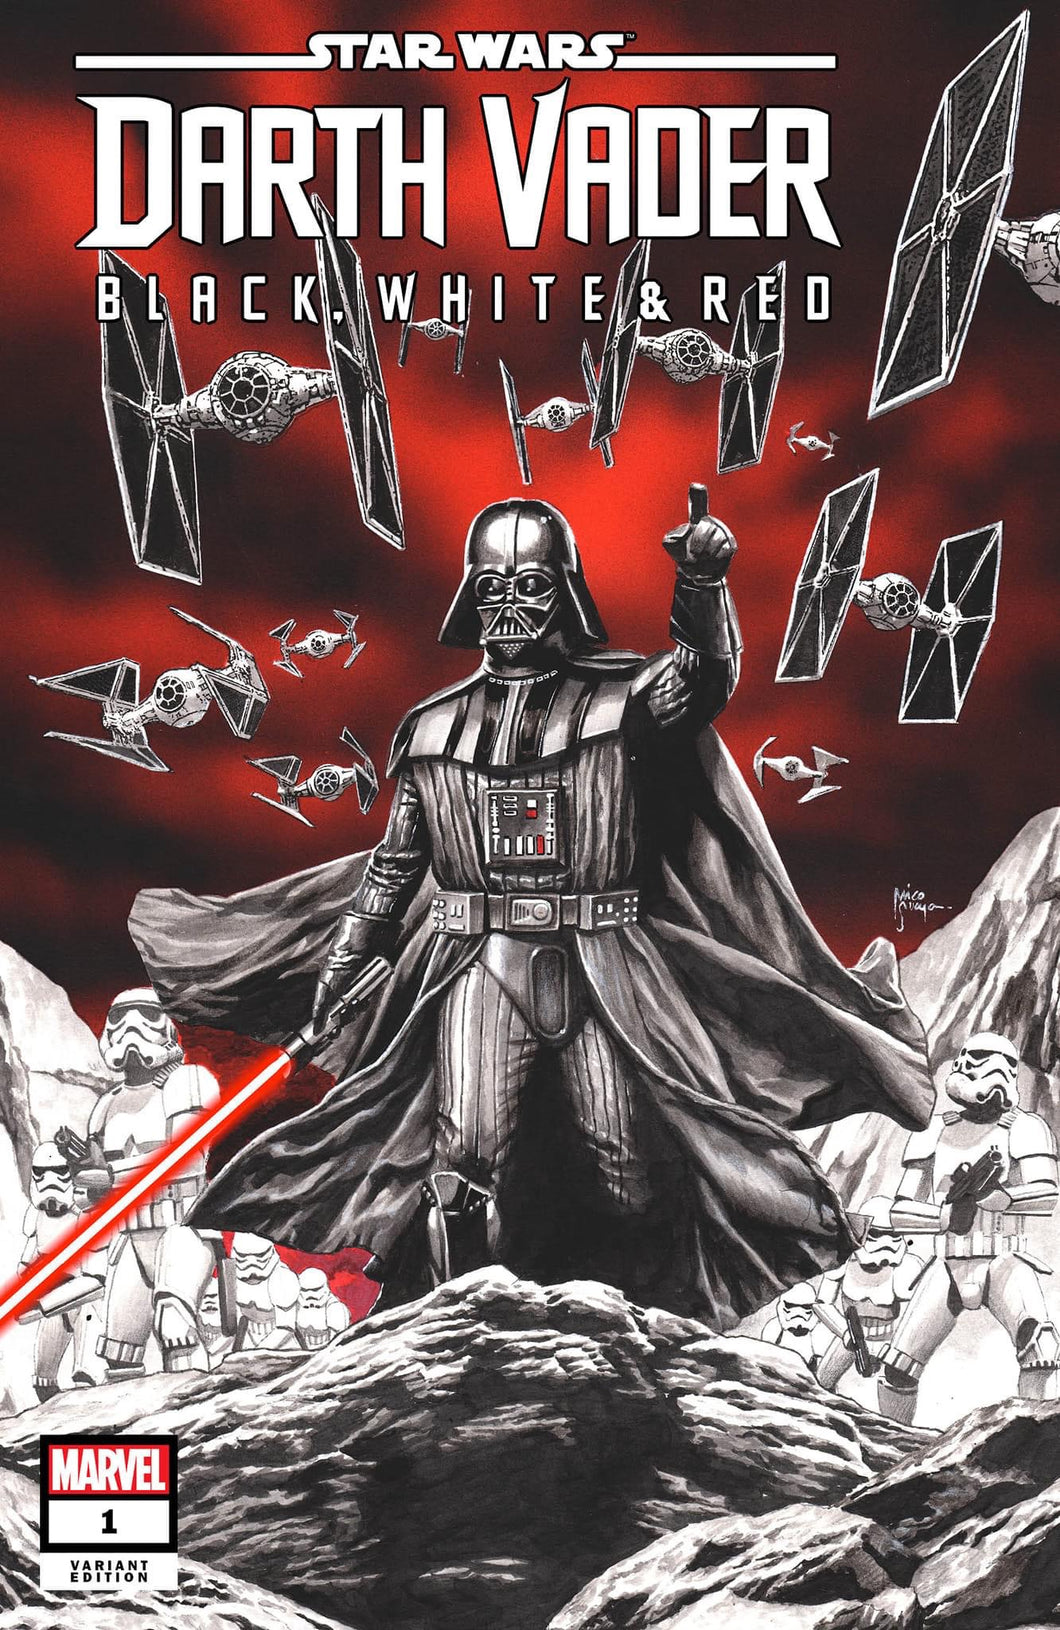 Darth Vader Black White & Red #1